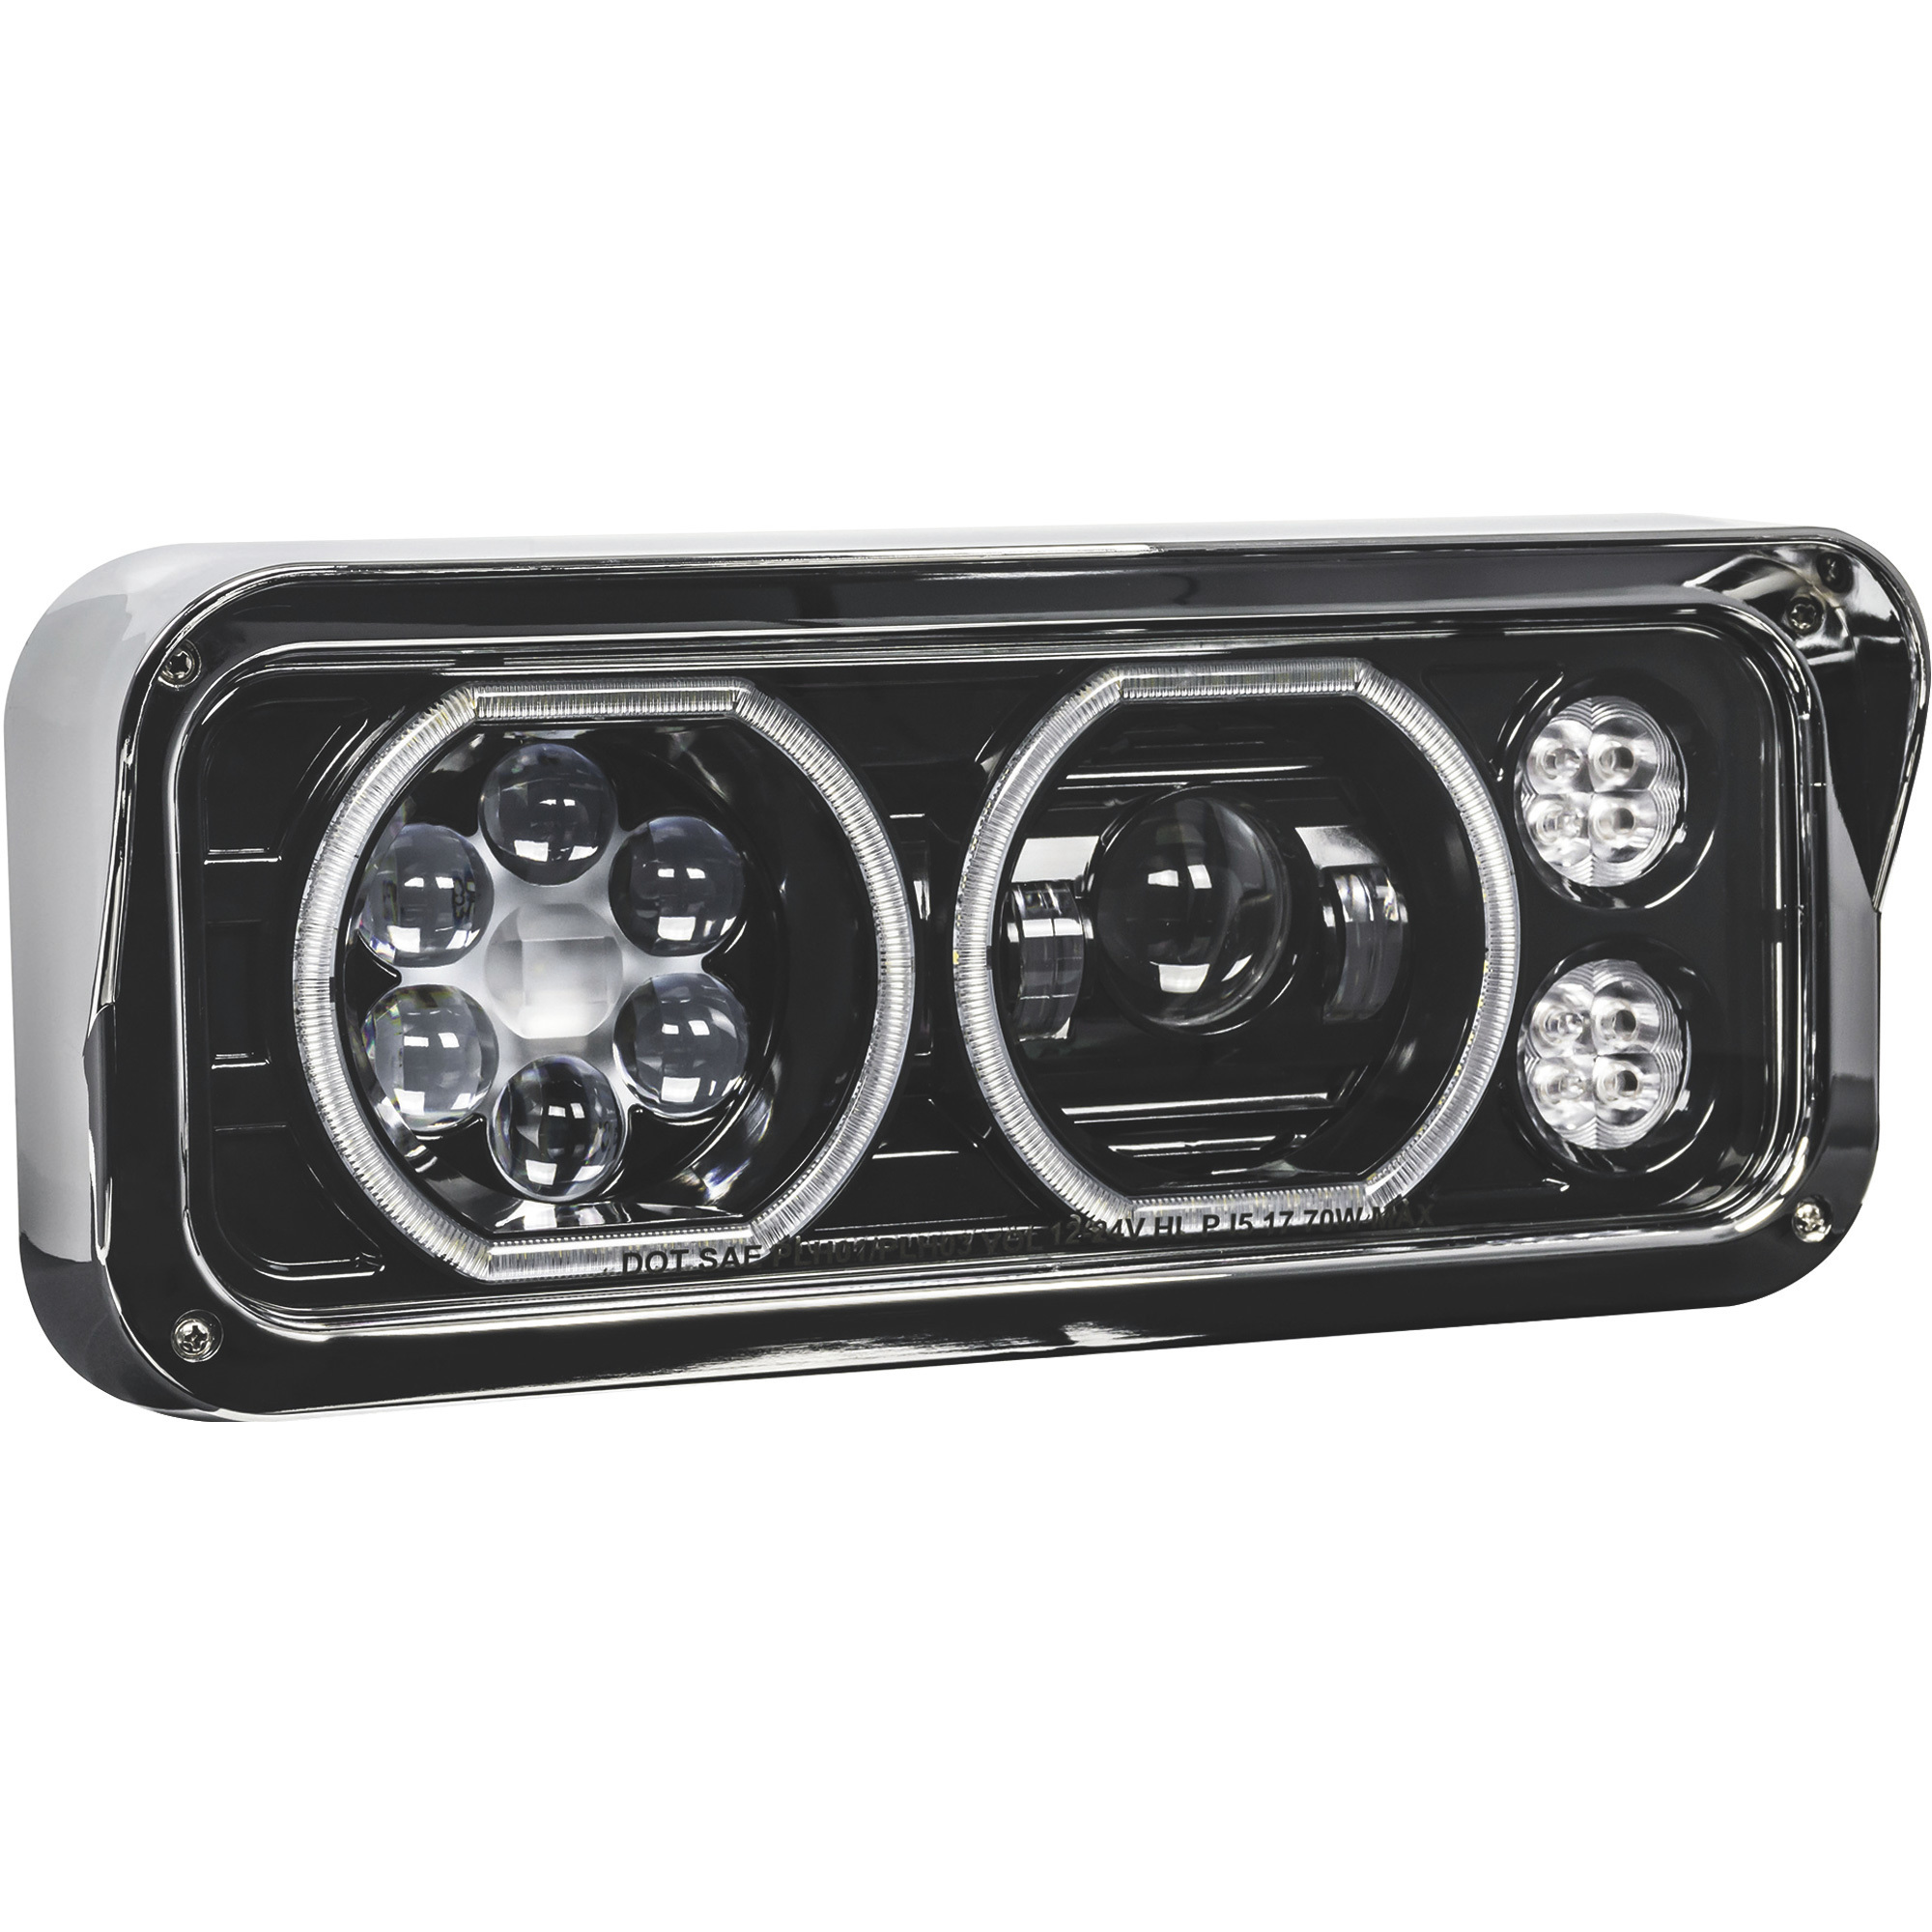 Trux Accessories 18Inch x 11Inch Universal Driver's Side LED Projector Semi-Truck Headlight â Model TLED-H122